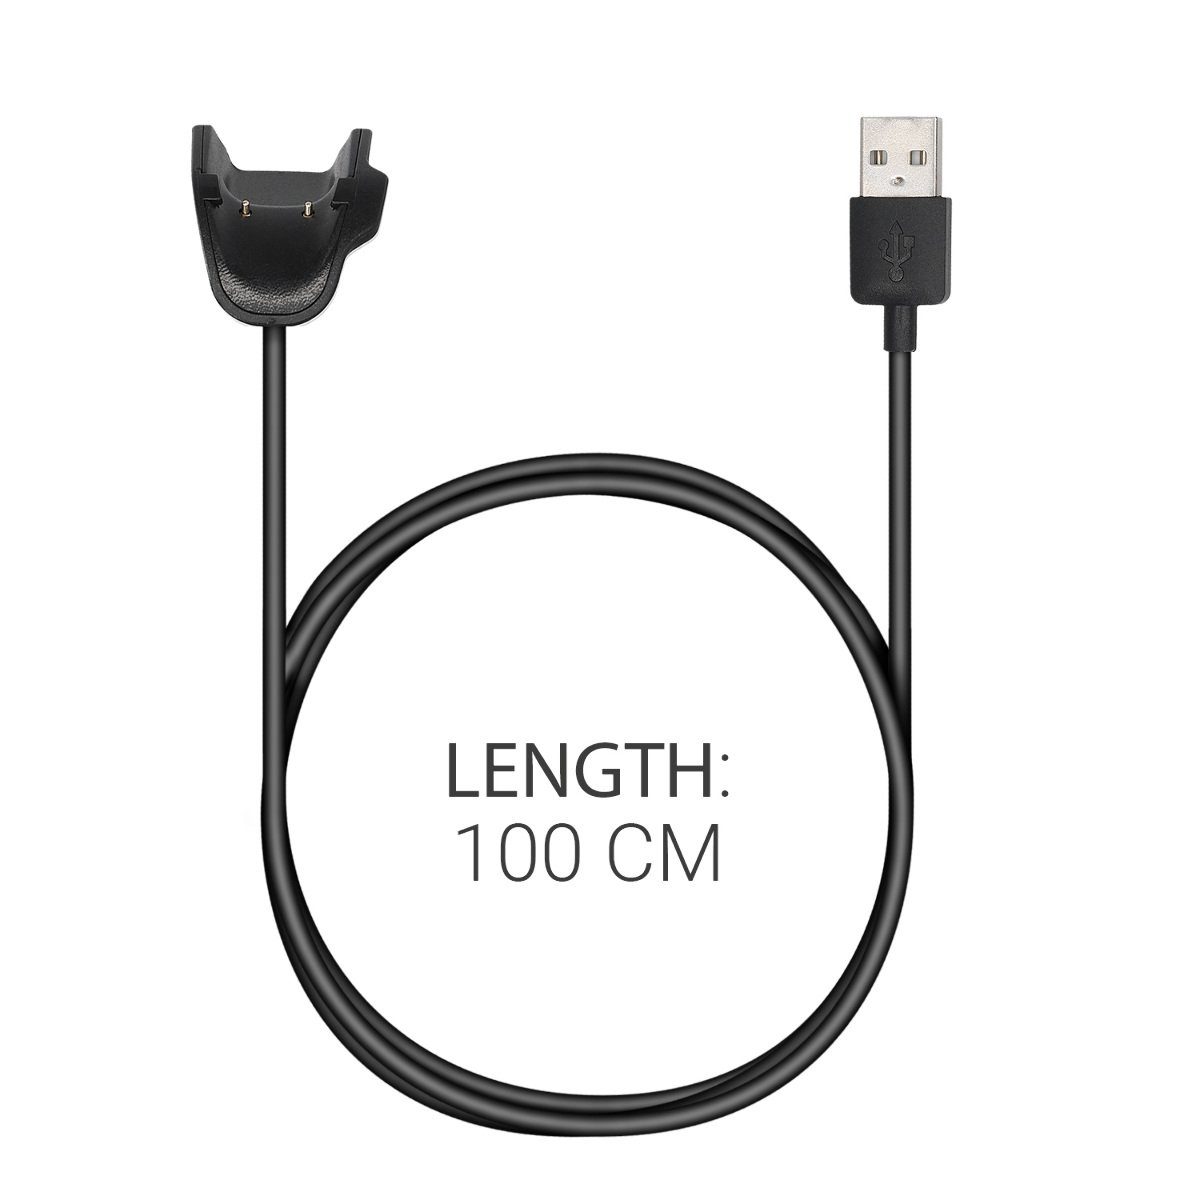 - Fit Kabel USB e für Smart Elektro-Kabel, Ladekabel Watch kwmobile Galaxy Fitnesstracker Aufladekabel Samsung Charger Ersatzkabel -